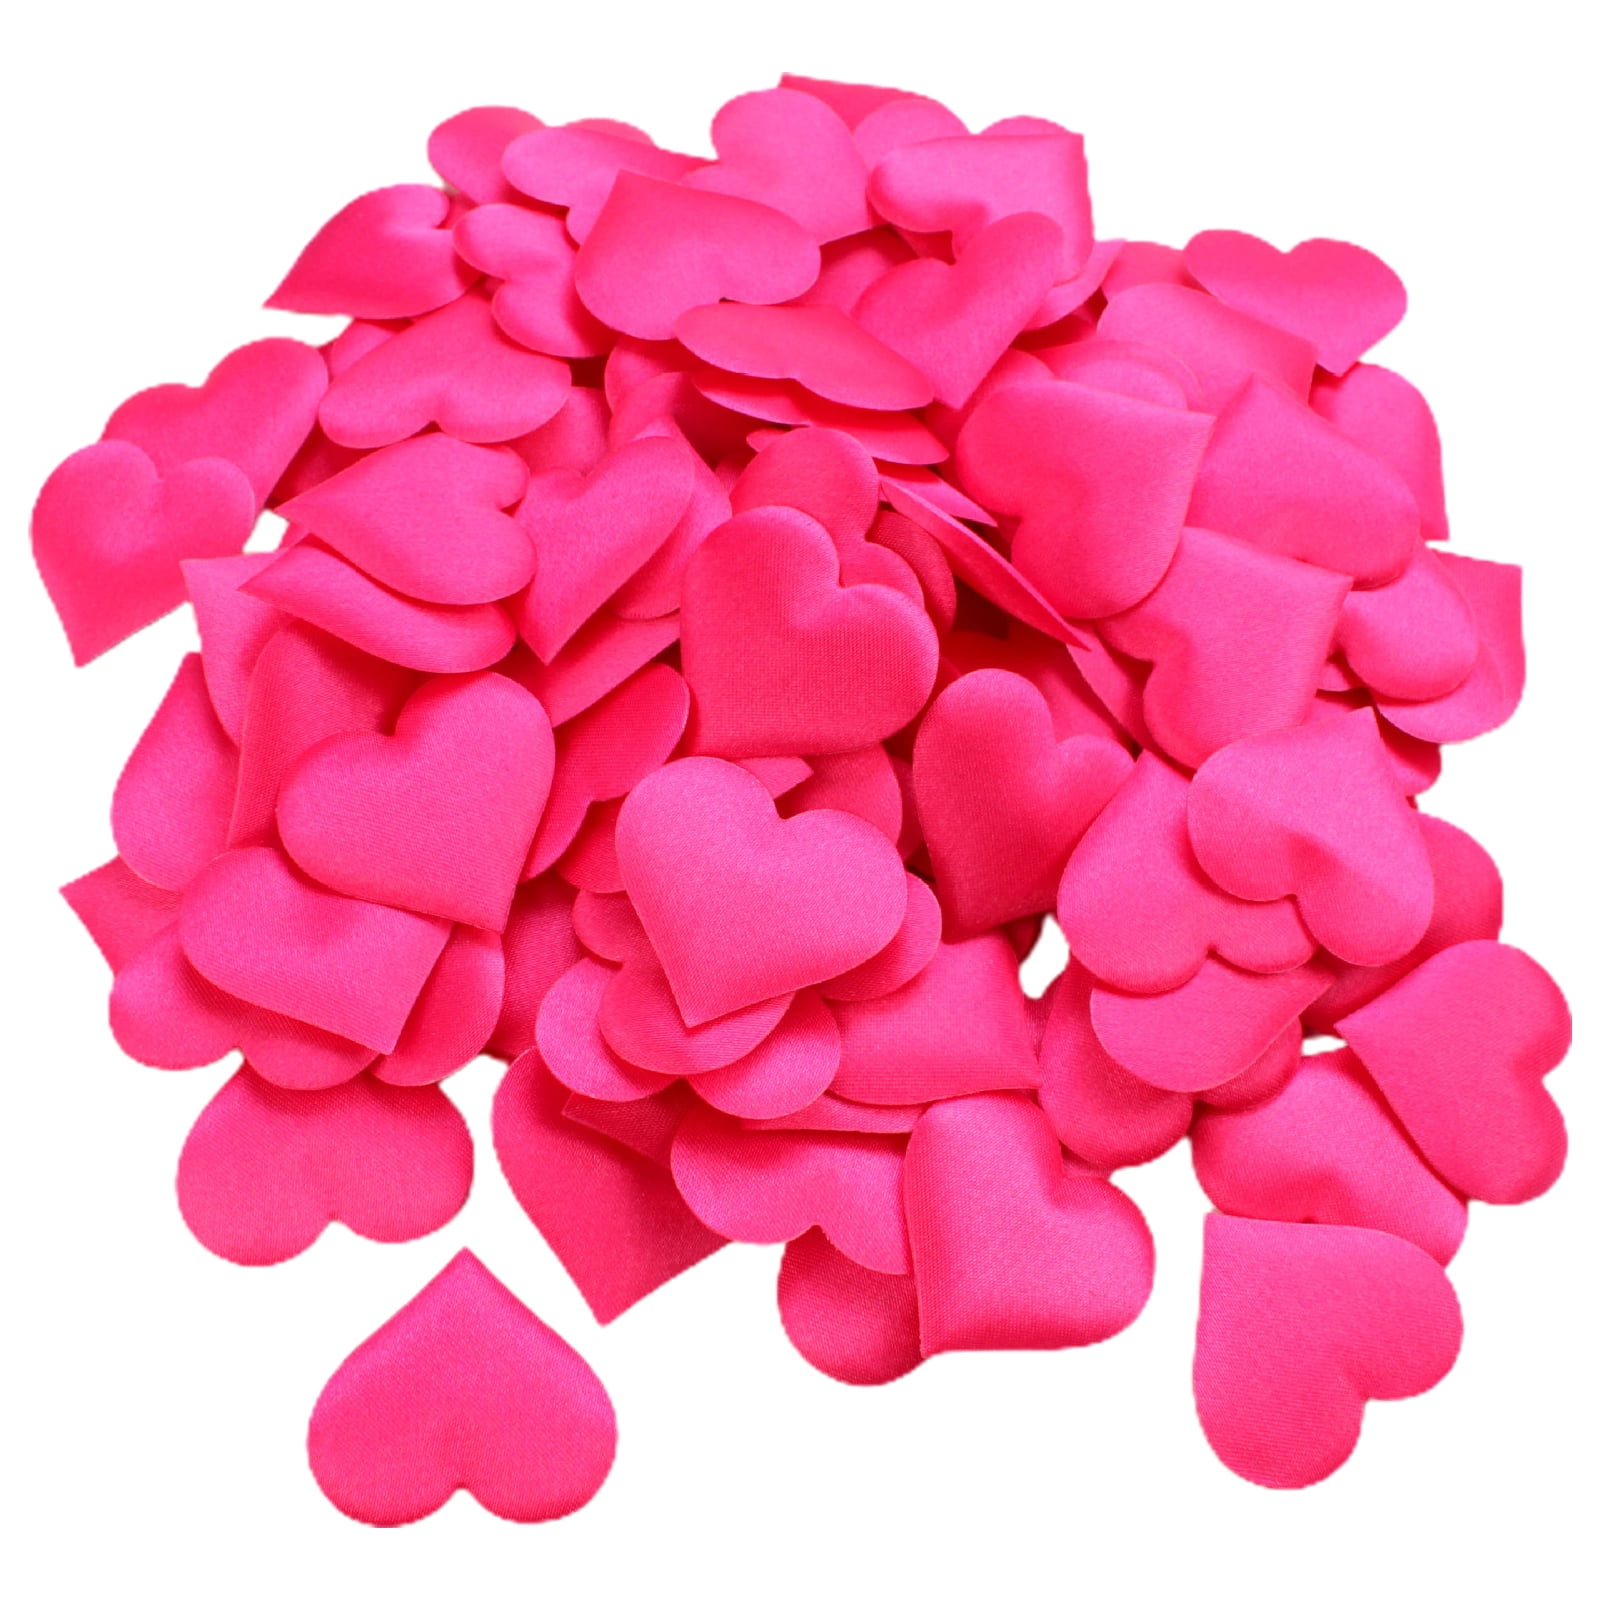 Sponge Hearts 100pcs Wedding Party Romantic Table Bed Decoration Confetti Petals 